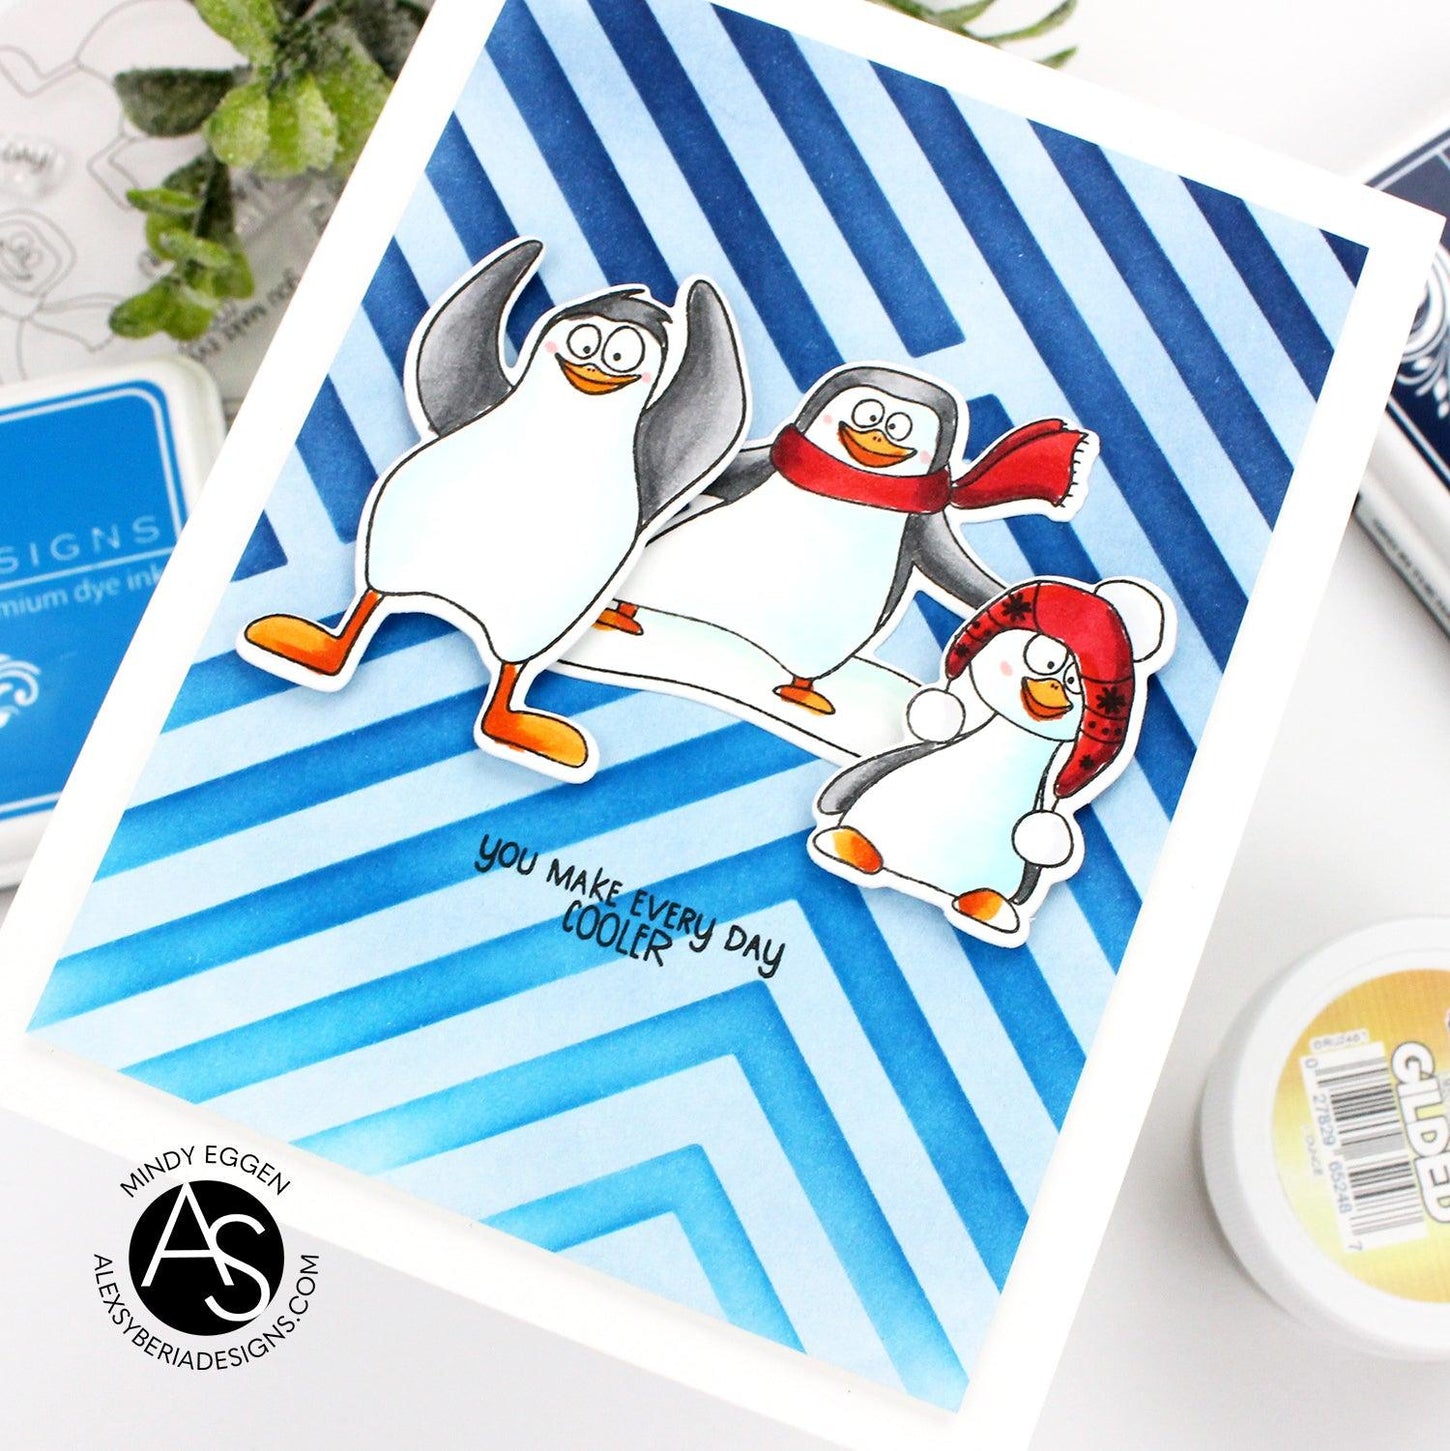 modern-stripes-stencil-alex-syberia-designs-penguins-stamp-cardmaking-ideas-mindy-eggen-guest-designer